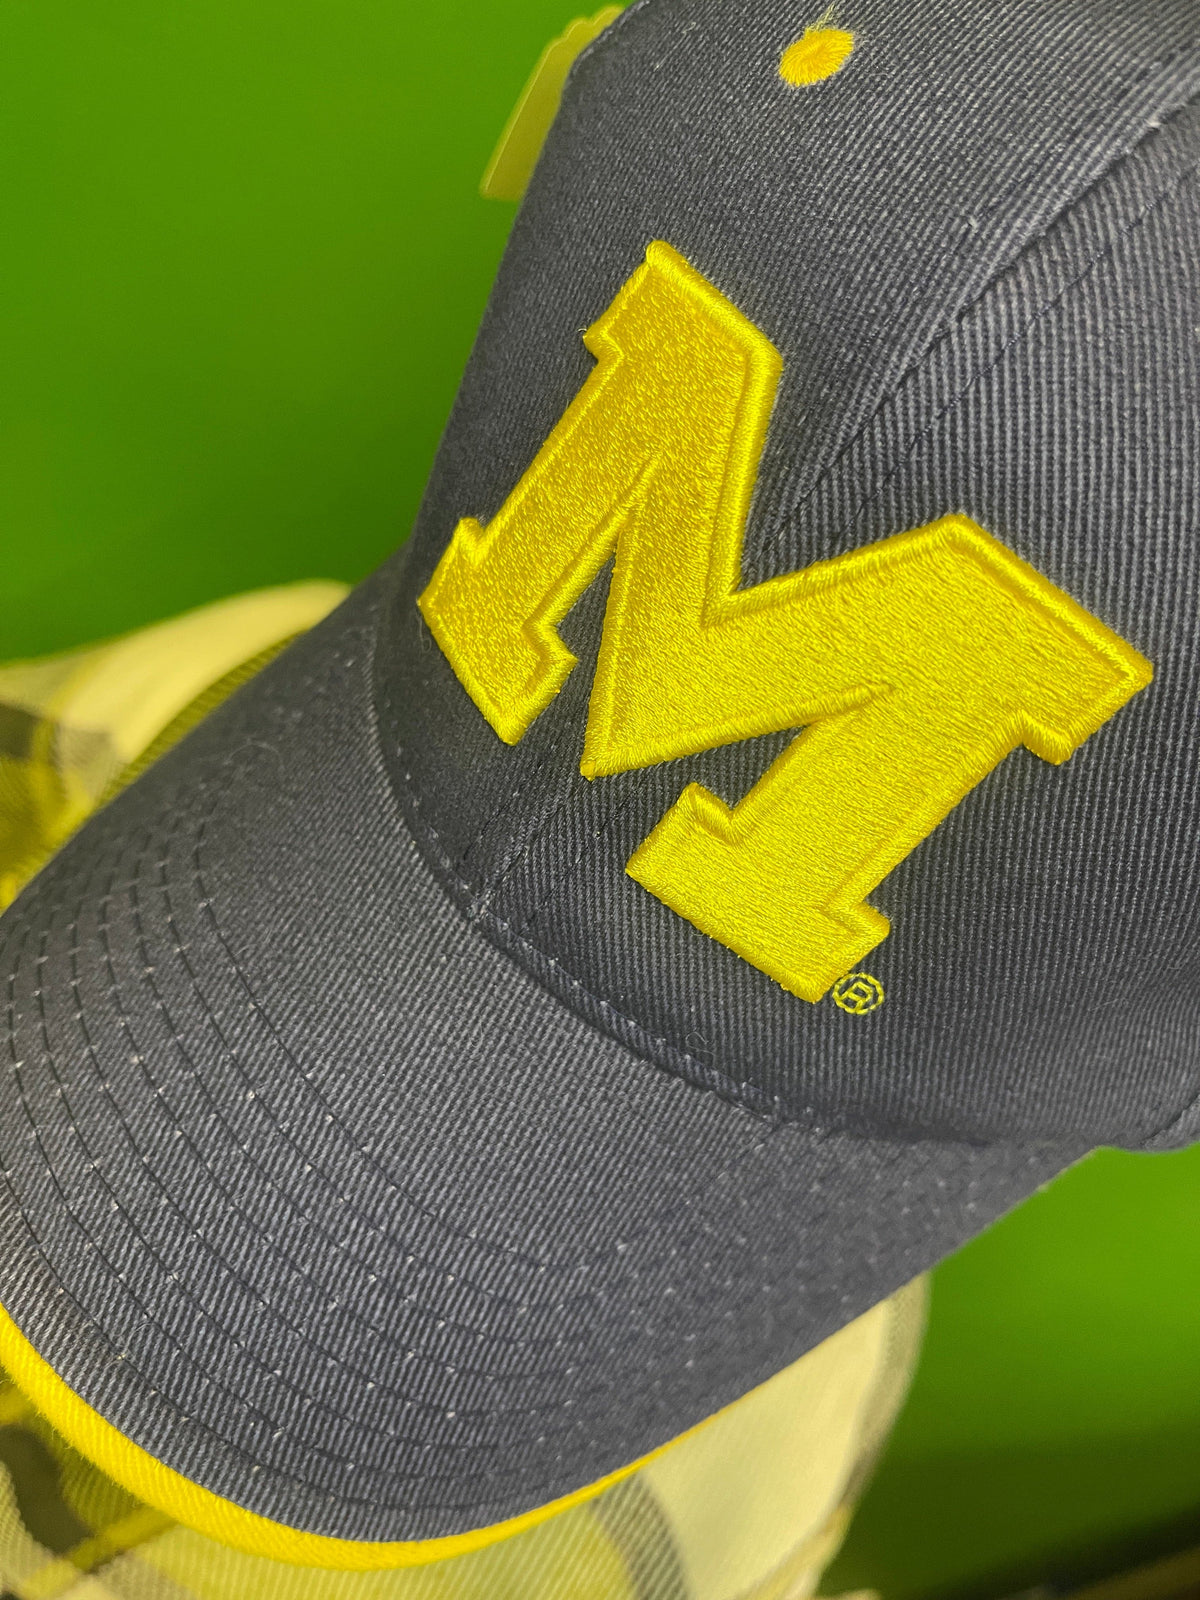 NCAA Michigan Wolverines Strapback Hat/Cap OSFM